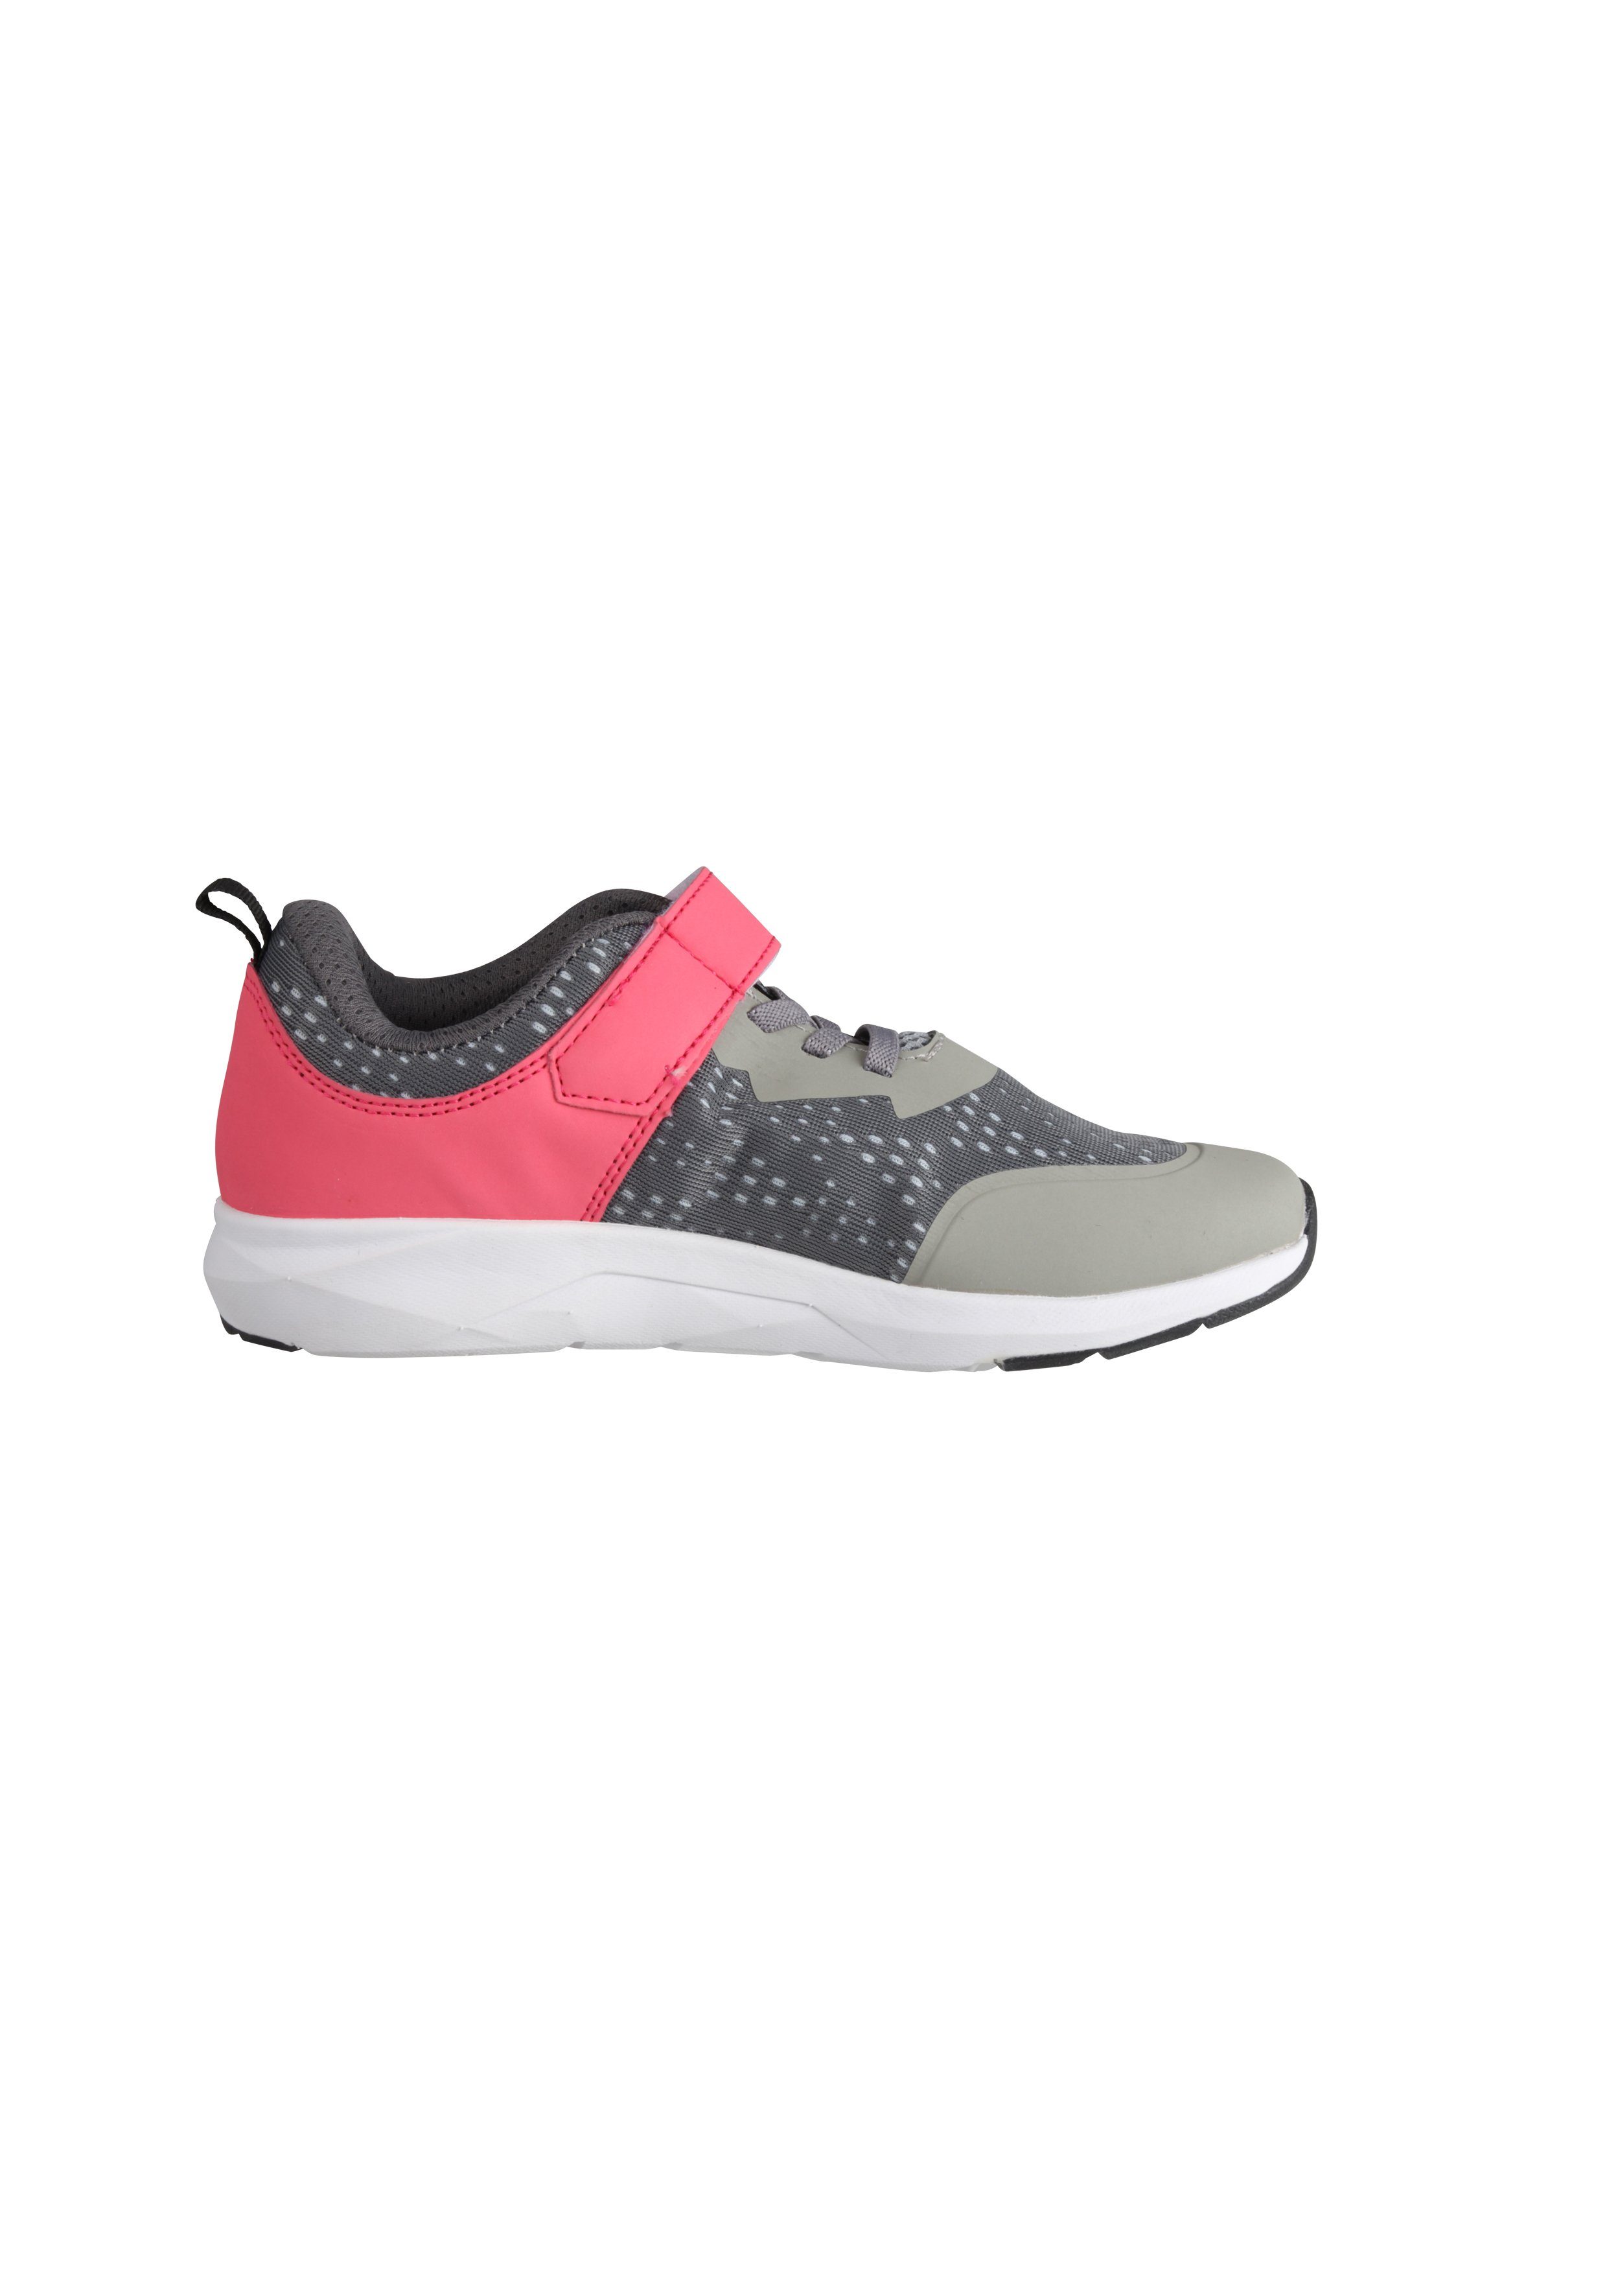 Sneaker Fun Sports Ferse grau-pink mit verstärkter Alpina